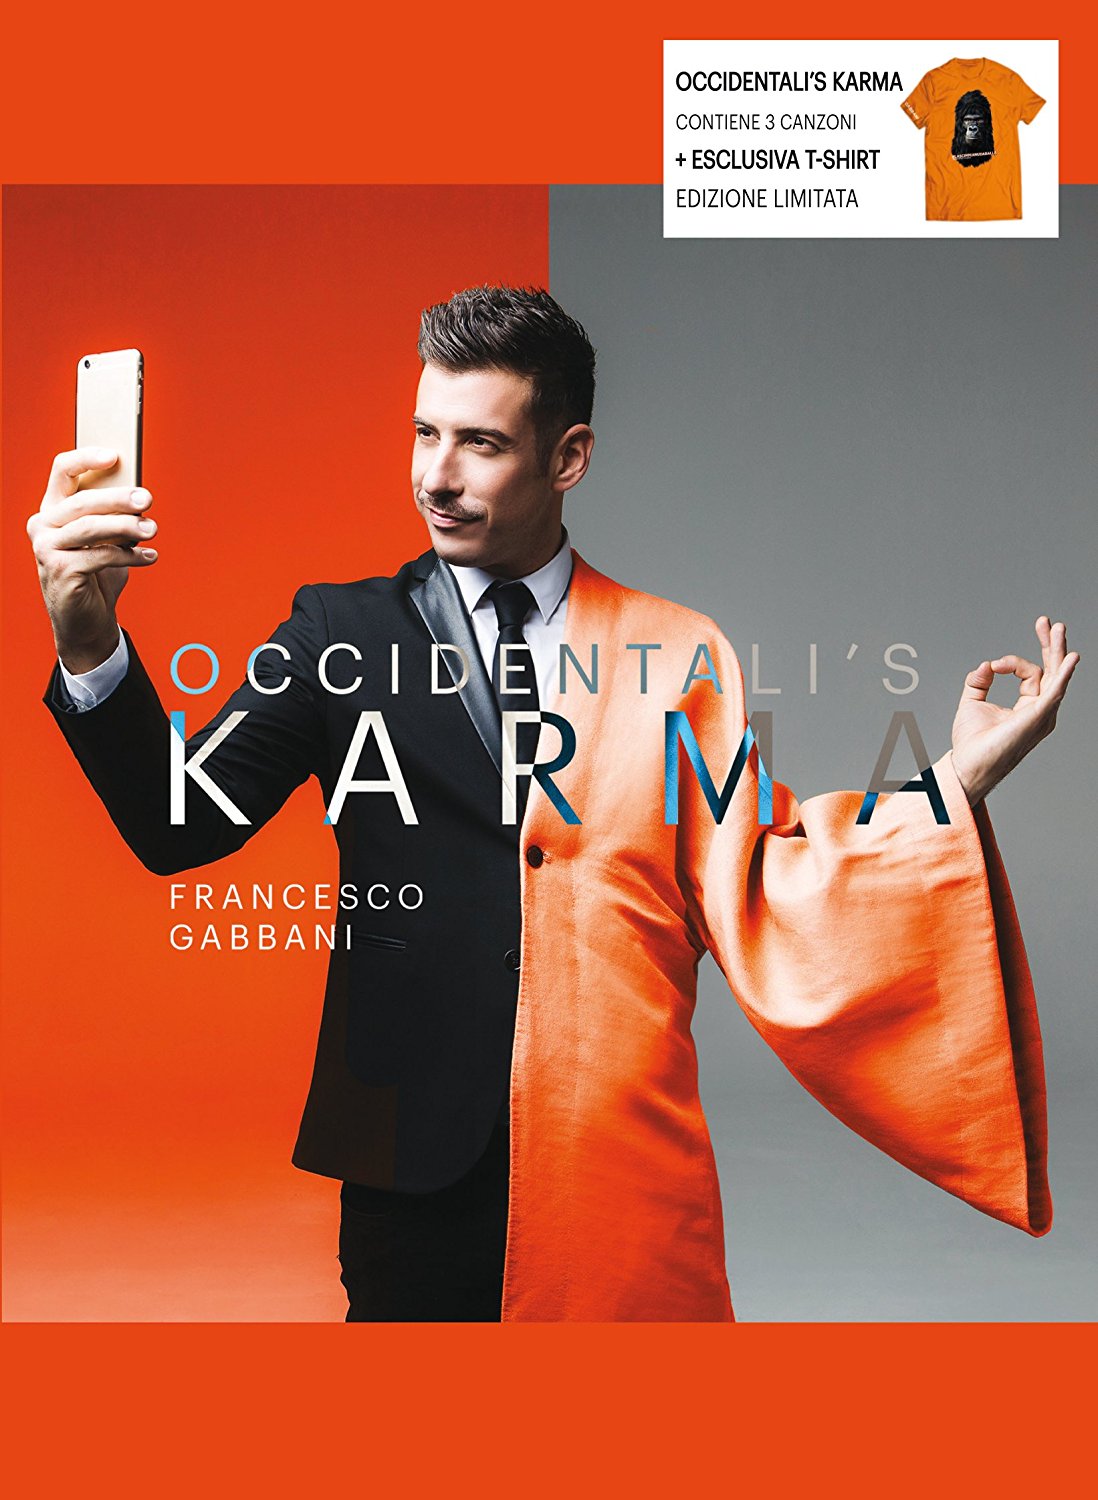 Recensione Francesco Gabbani - Occidentali's Karma